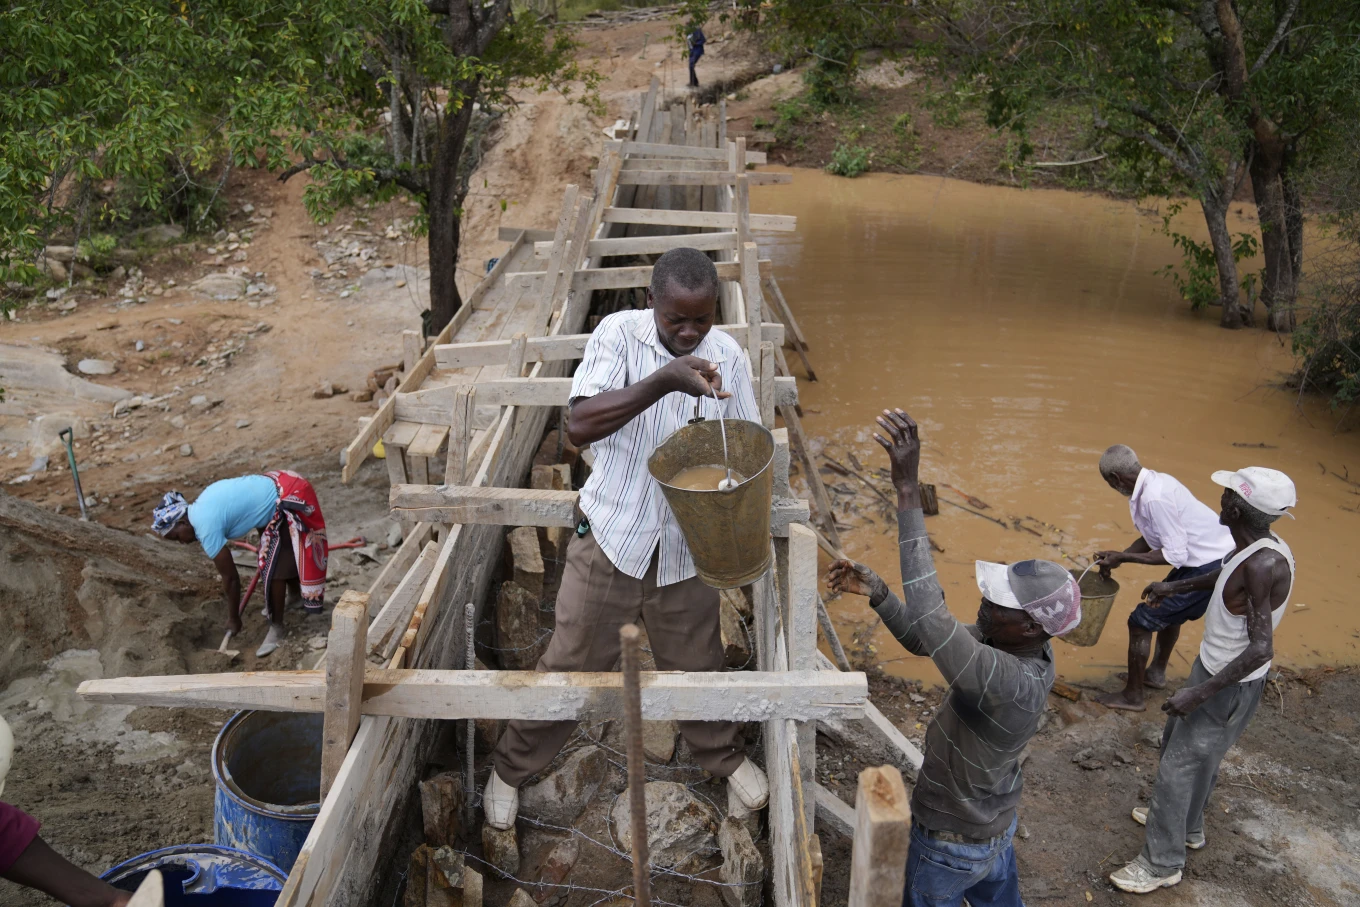 Water: Kenyans in semi-arid regions turn to sand dams on seasonal rivers to trap surface runoff